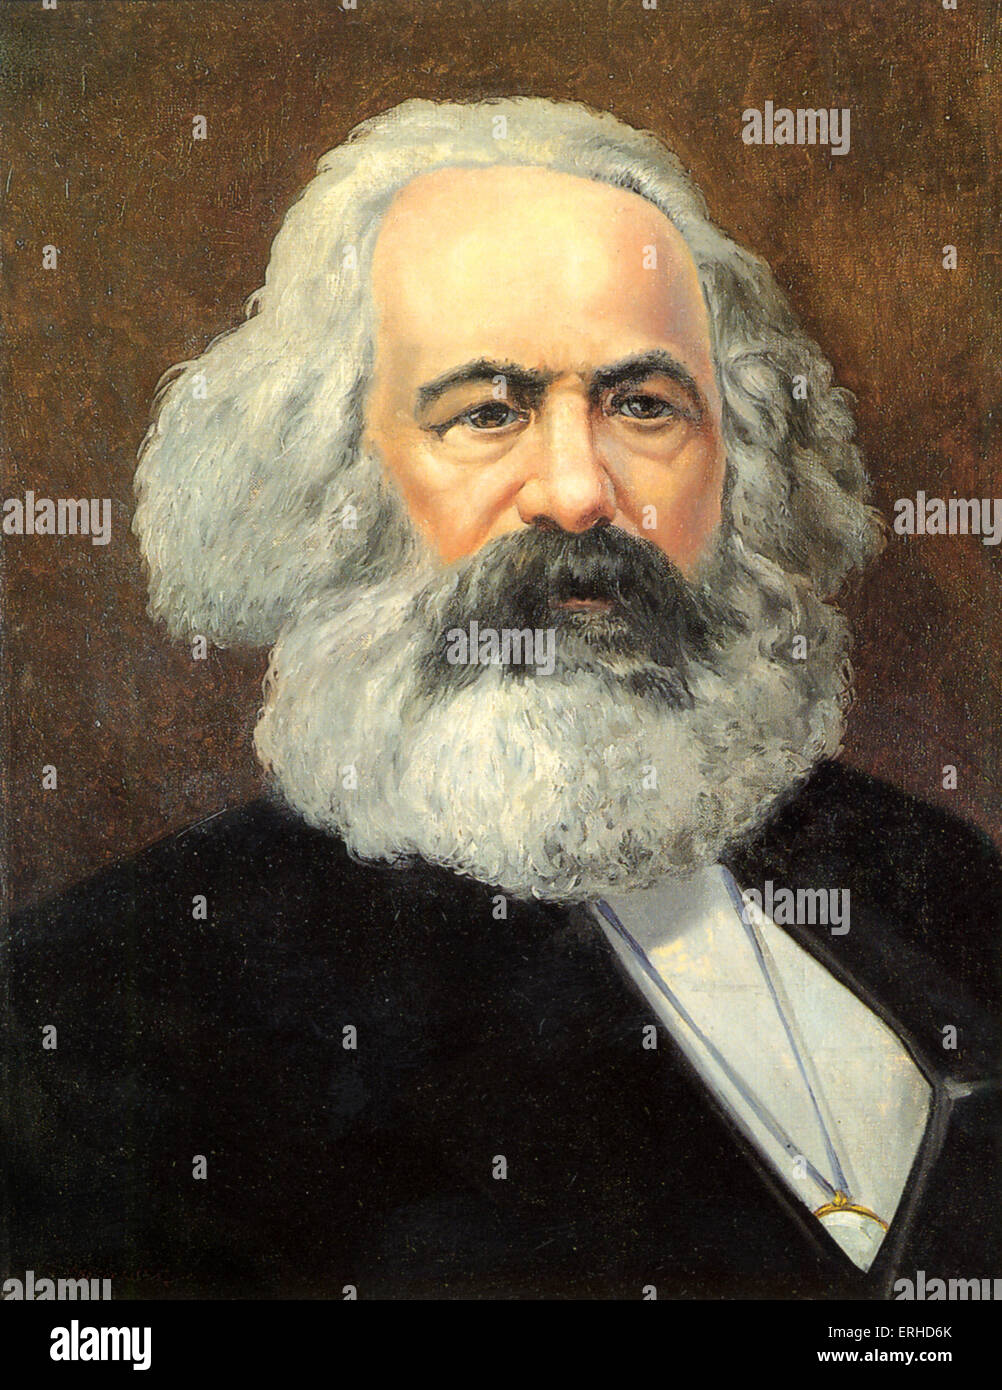 Karl Marx - Porträt der deutschen Historiker, Ökonom und revolutionäre 5. Mai 1818 - 14. März 1883. Stockfoto